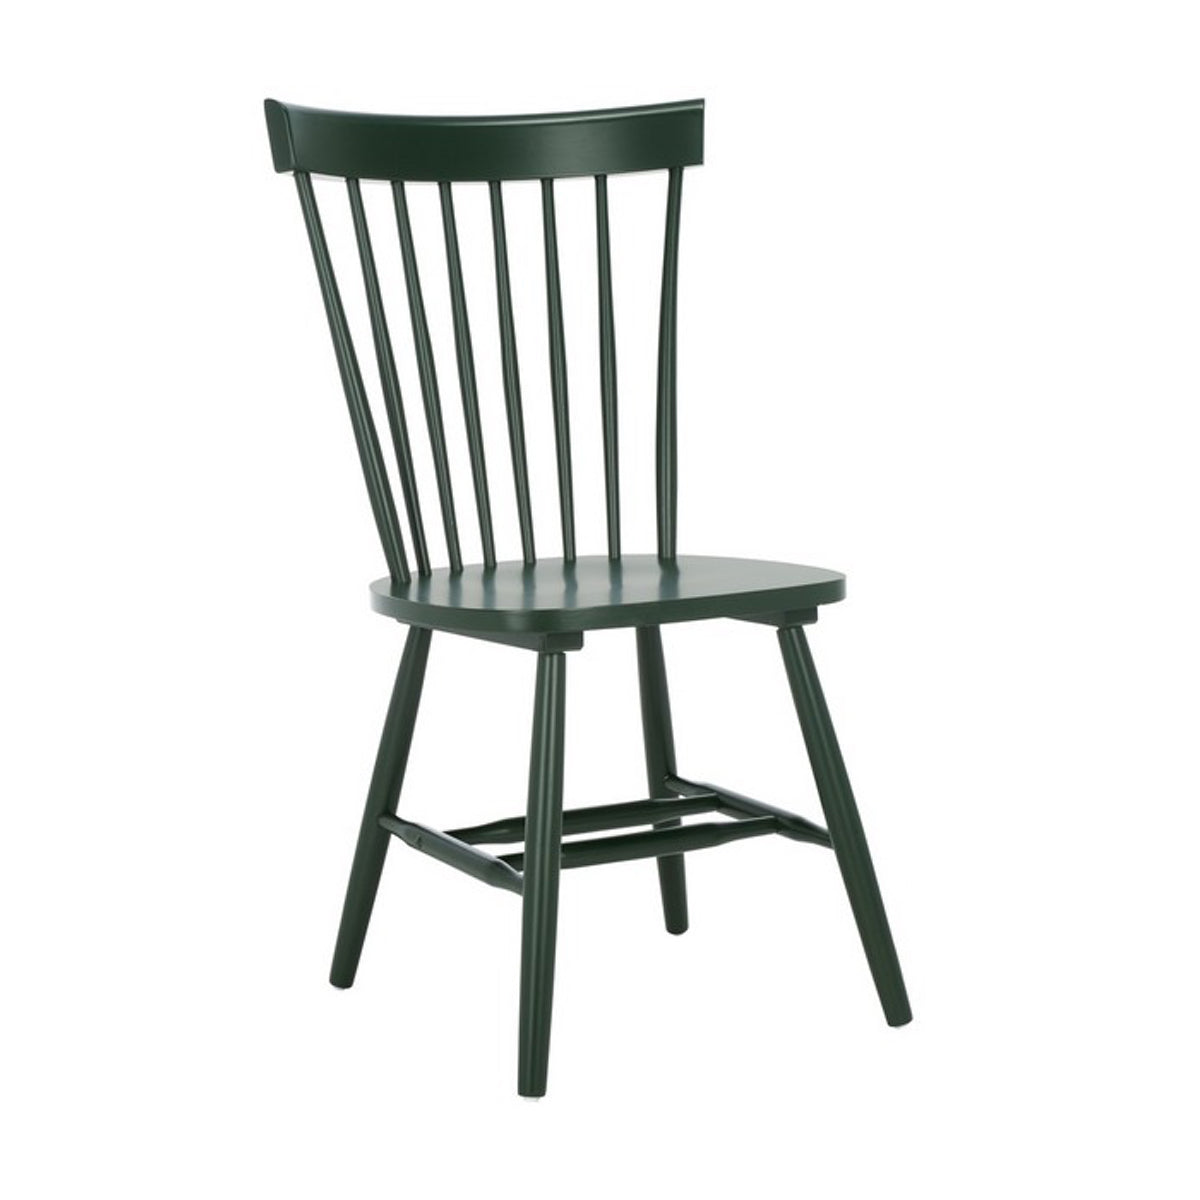 Reggie Side Chair - Set of 2